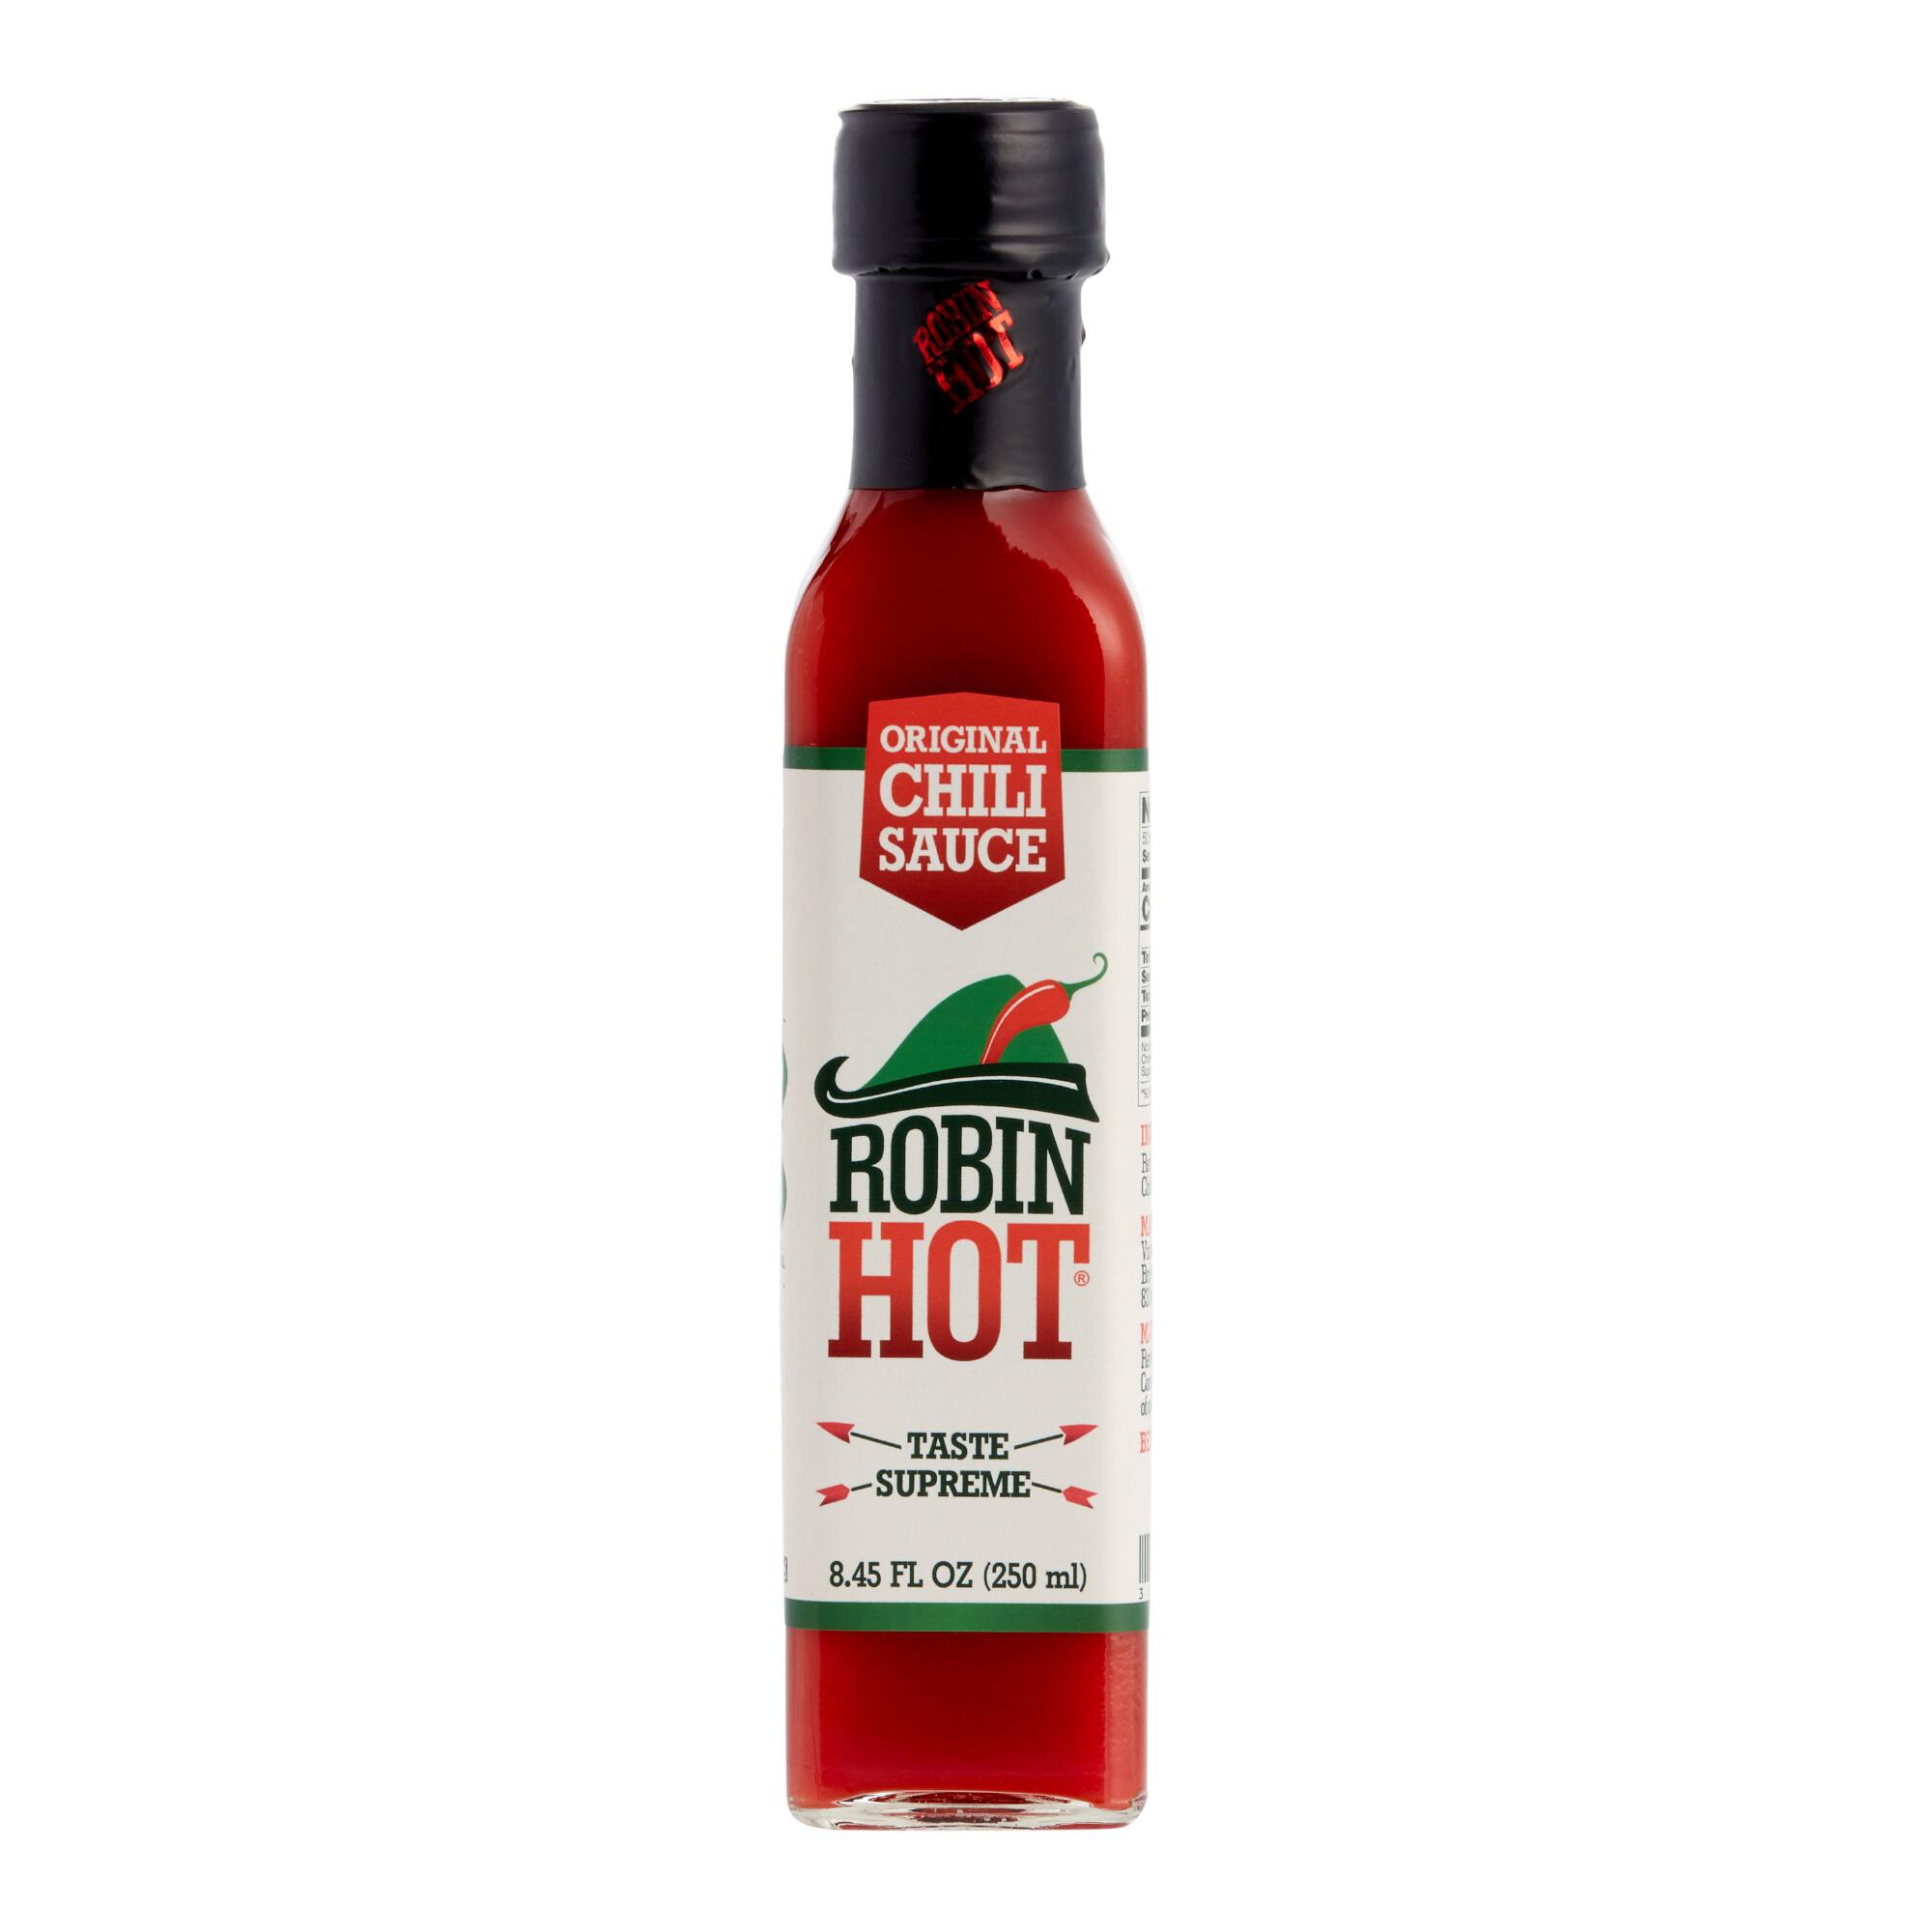 Robin Hot Original Chili Sauce by World Market